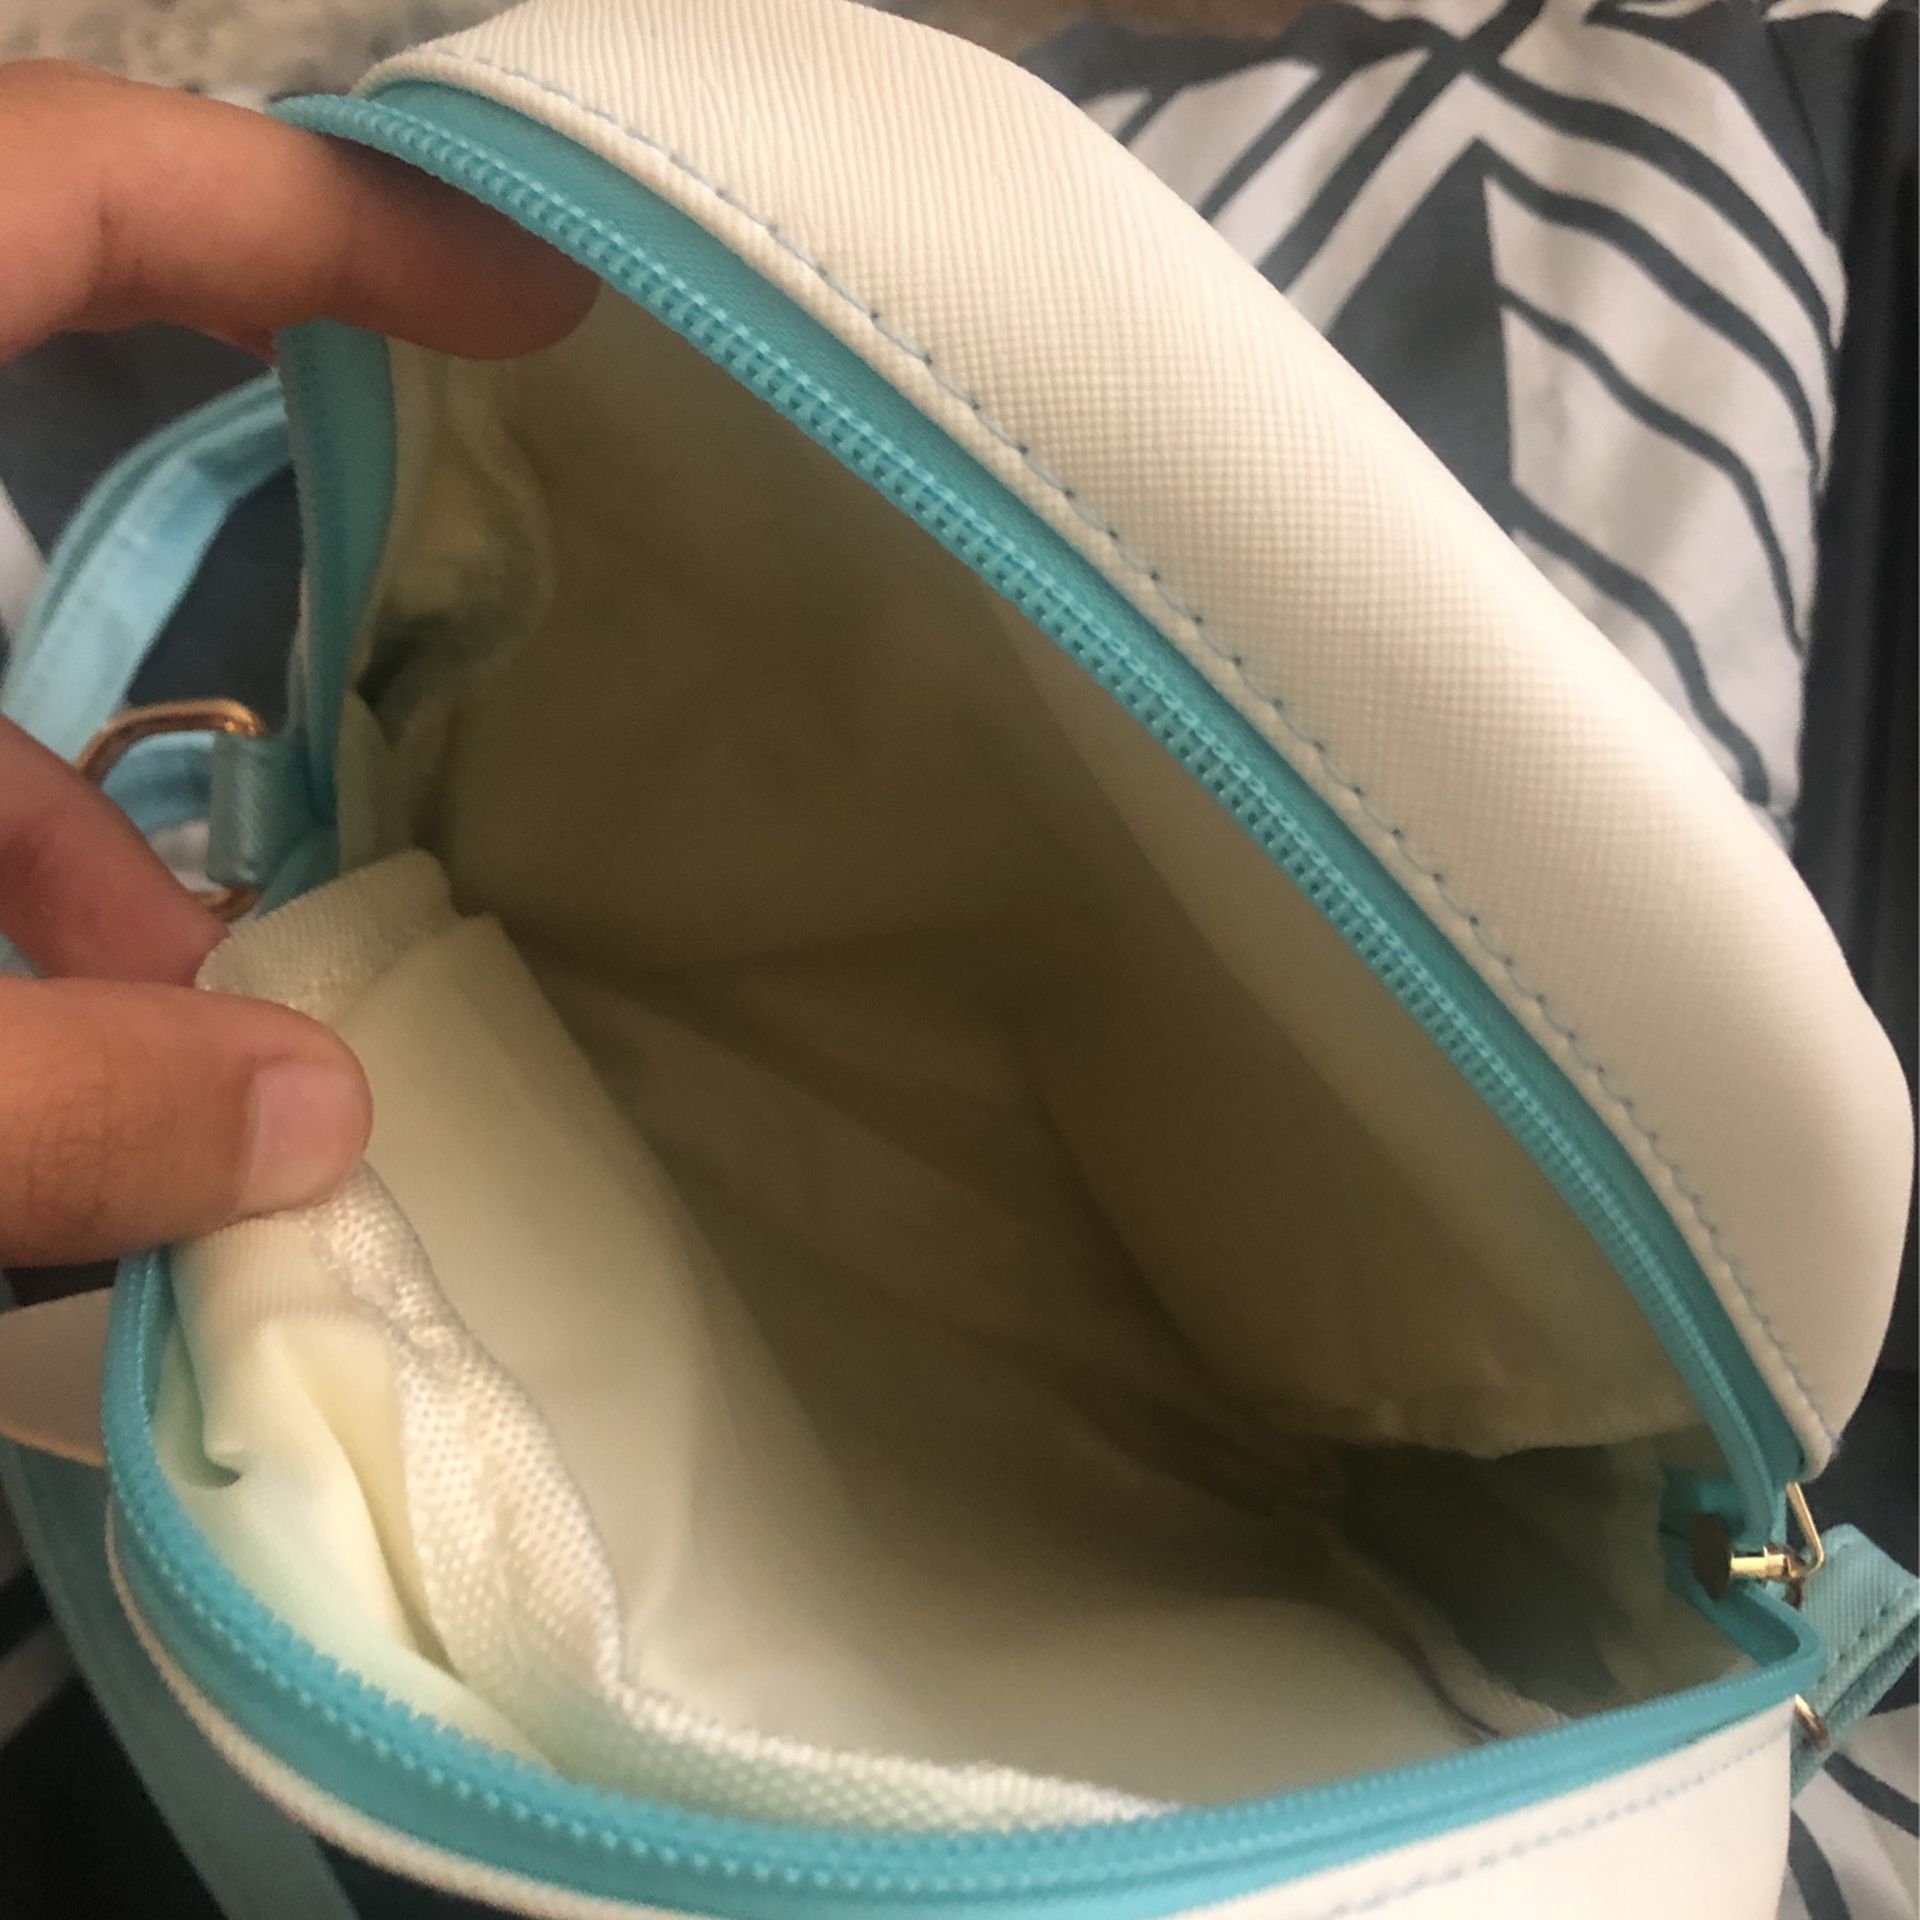  Cinnamon roll Backpack/purse